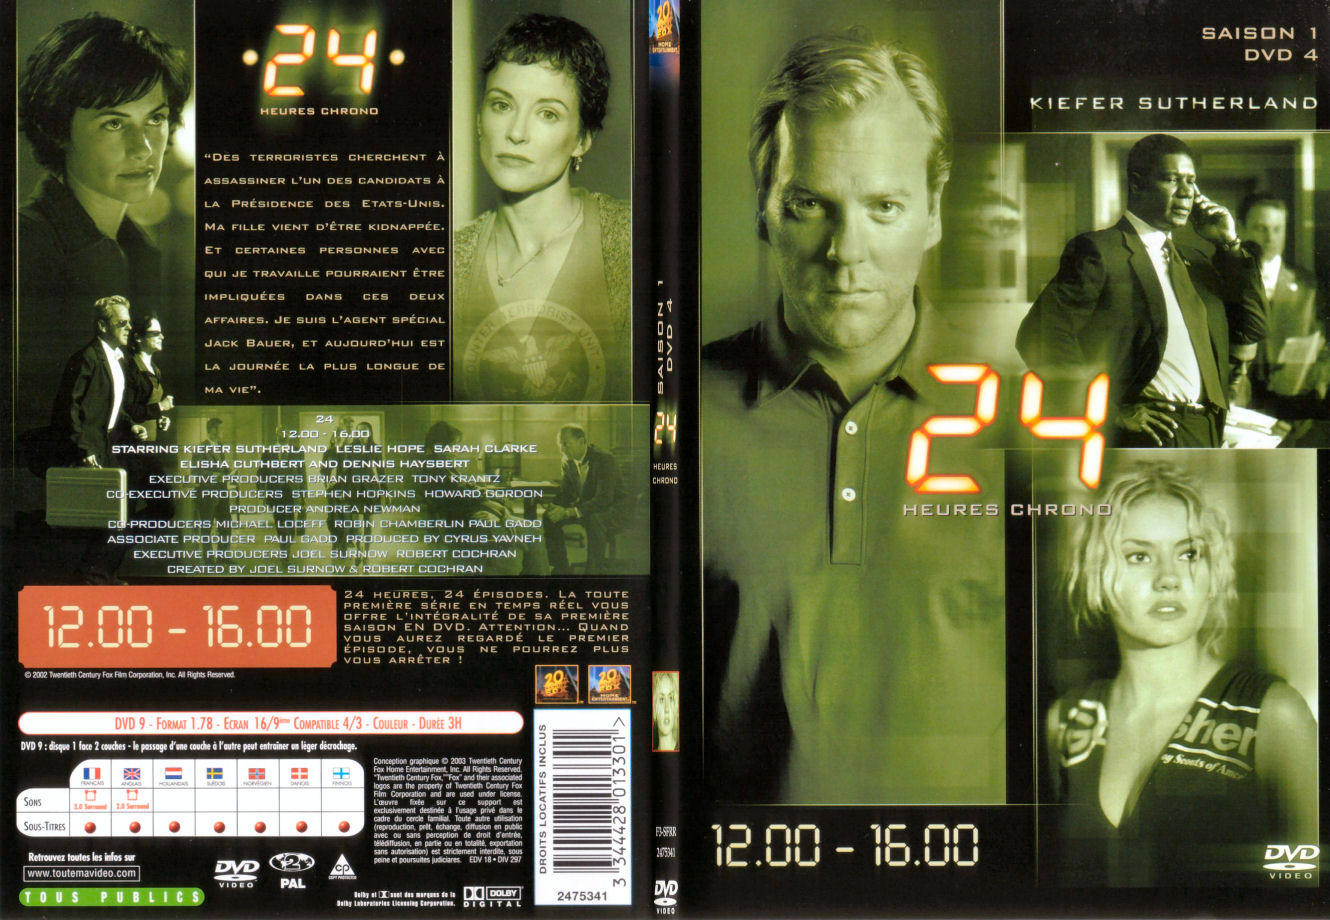 Jaquette DVD 24 heures chrono Saison 1 dvd 4 - SLIM